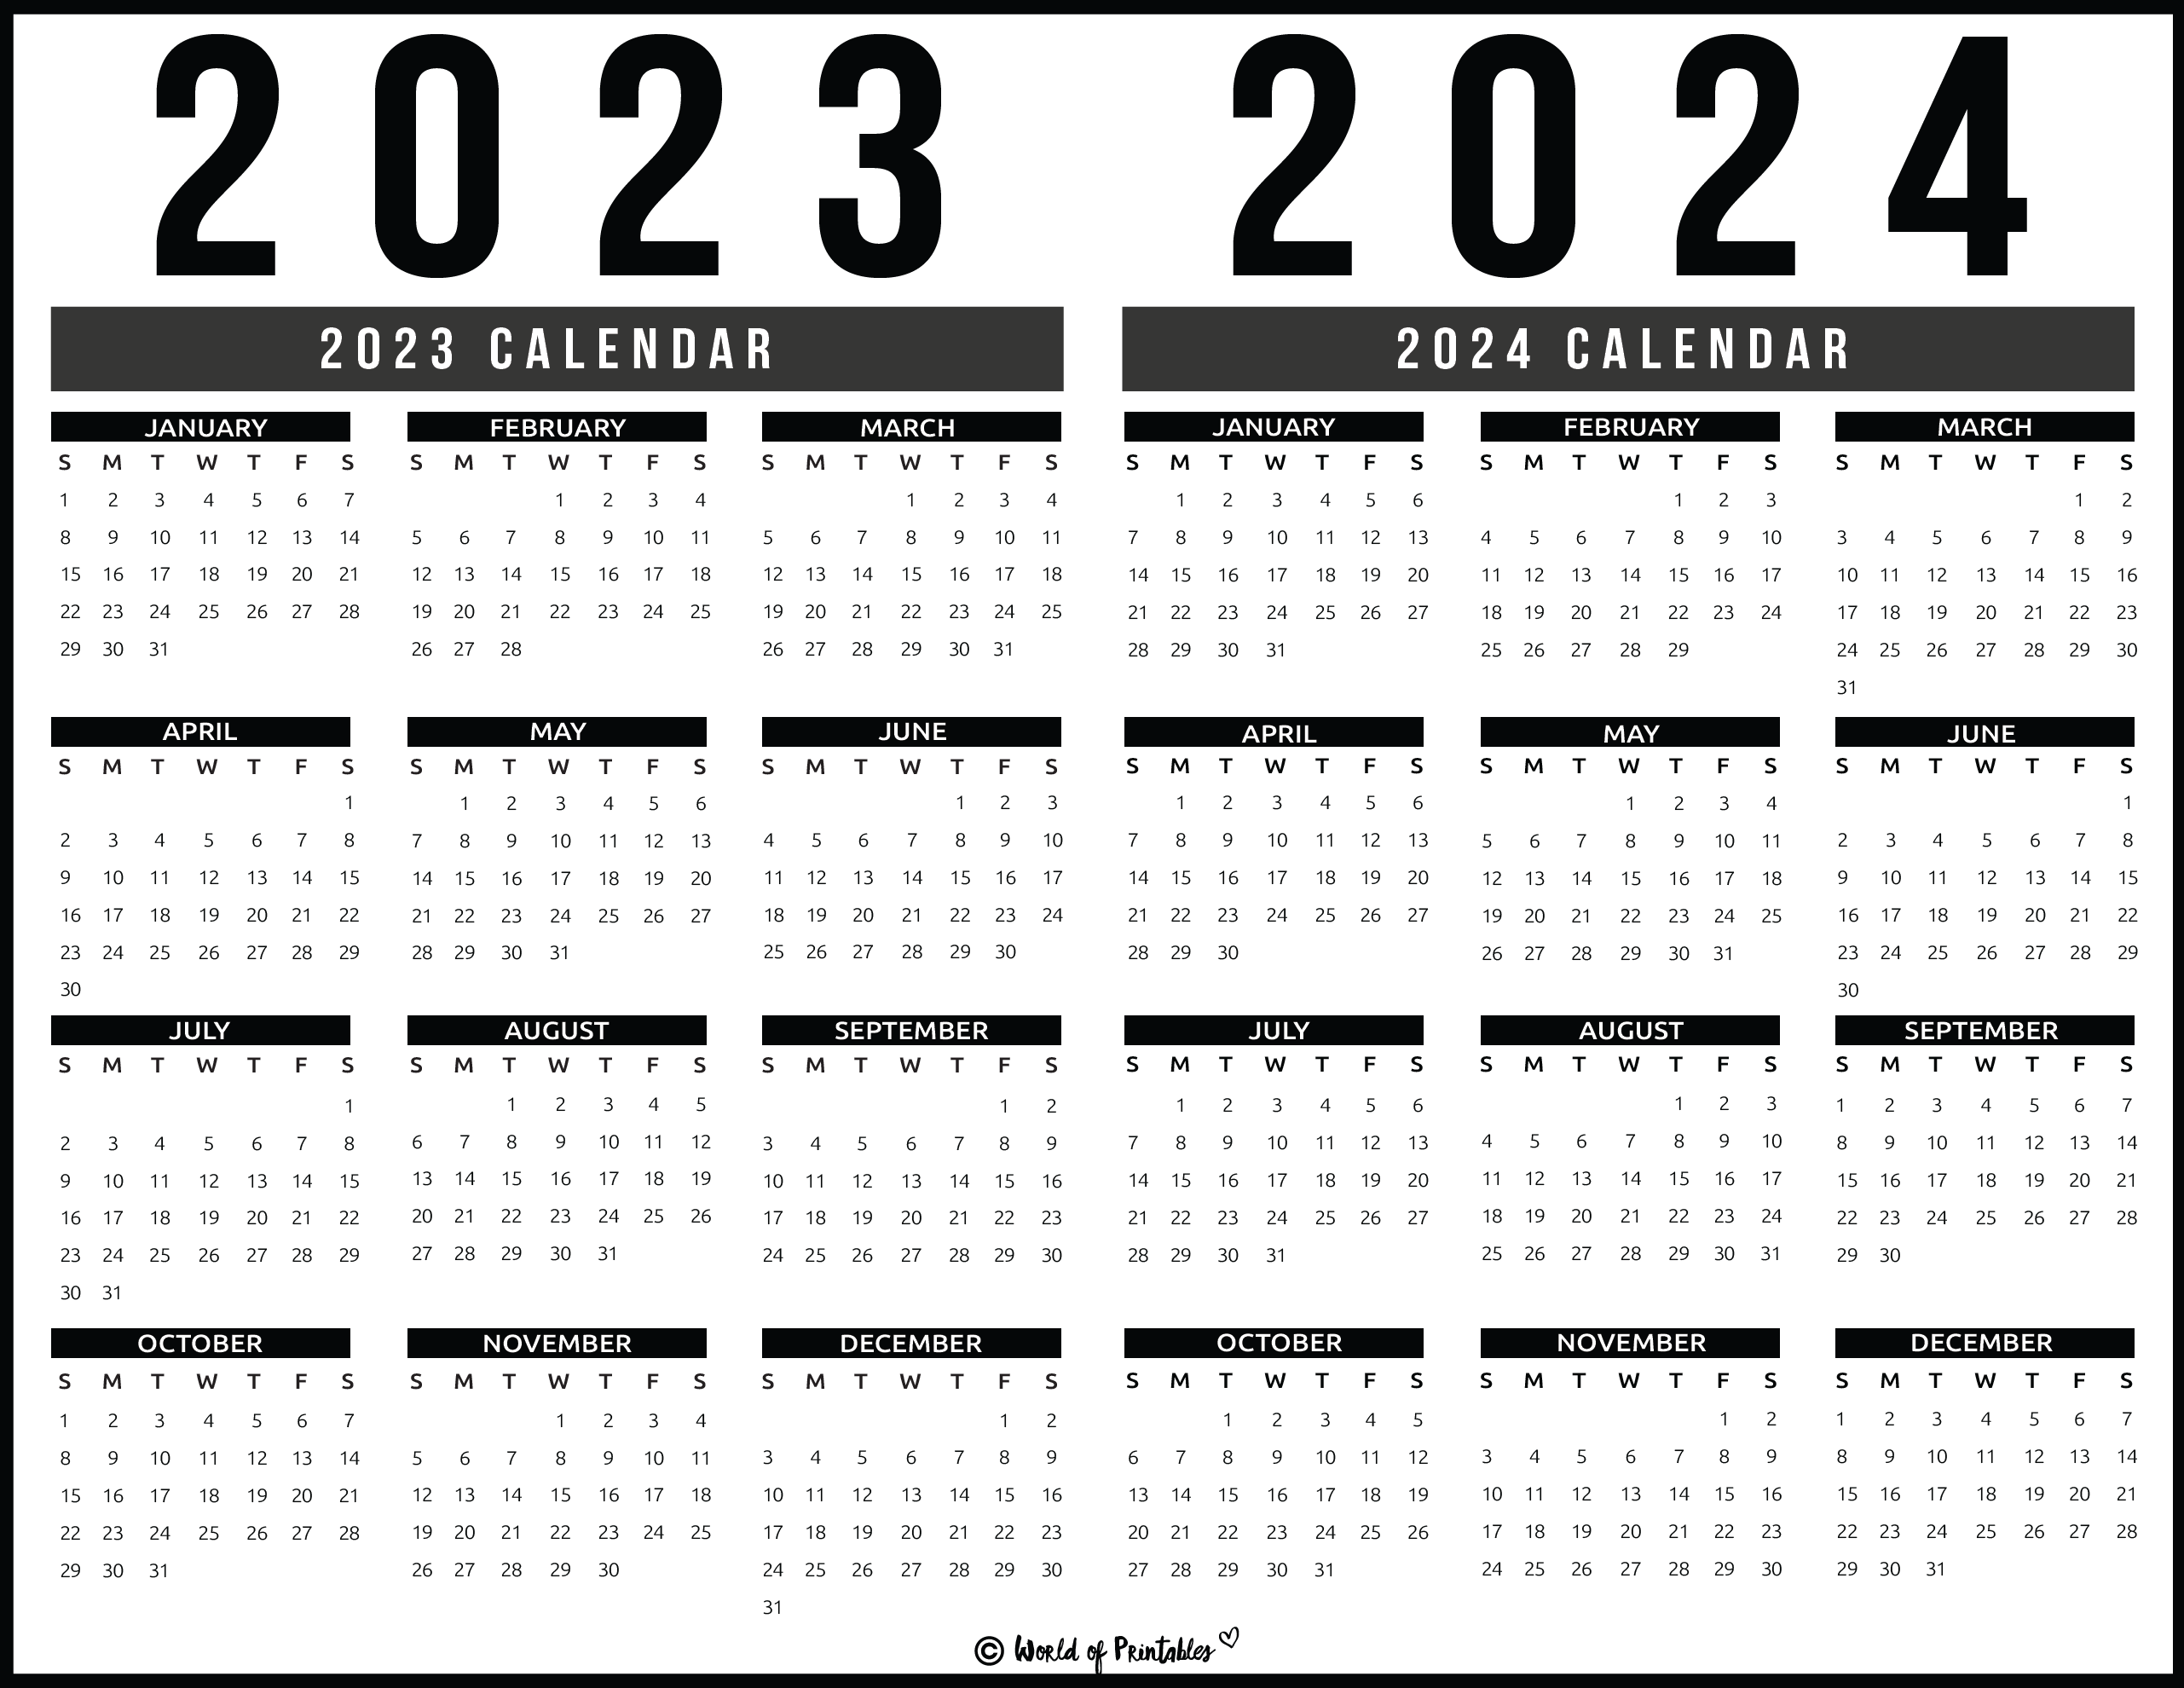 2023 2024 Calendar Free Printables - World Of Printables for 2023 Calendar 2024 Printable Free